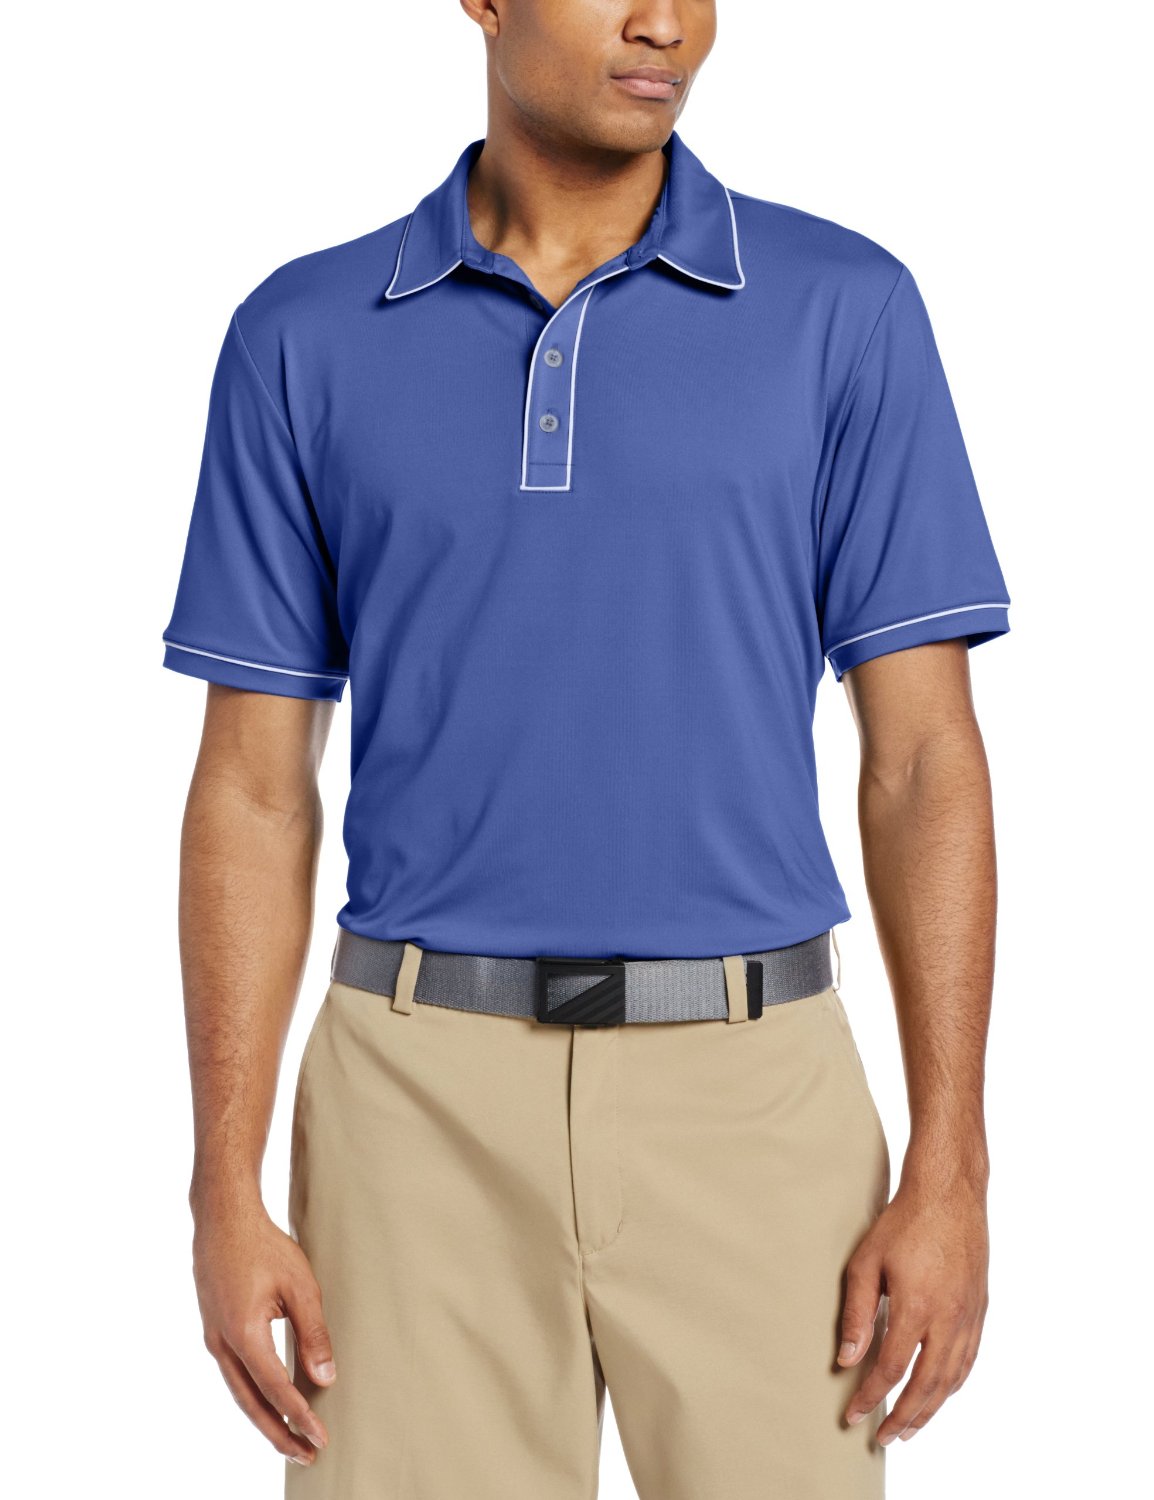 Adidas Puremotion Piped Golf Polo Shirts